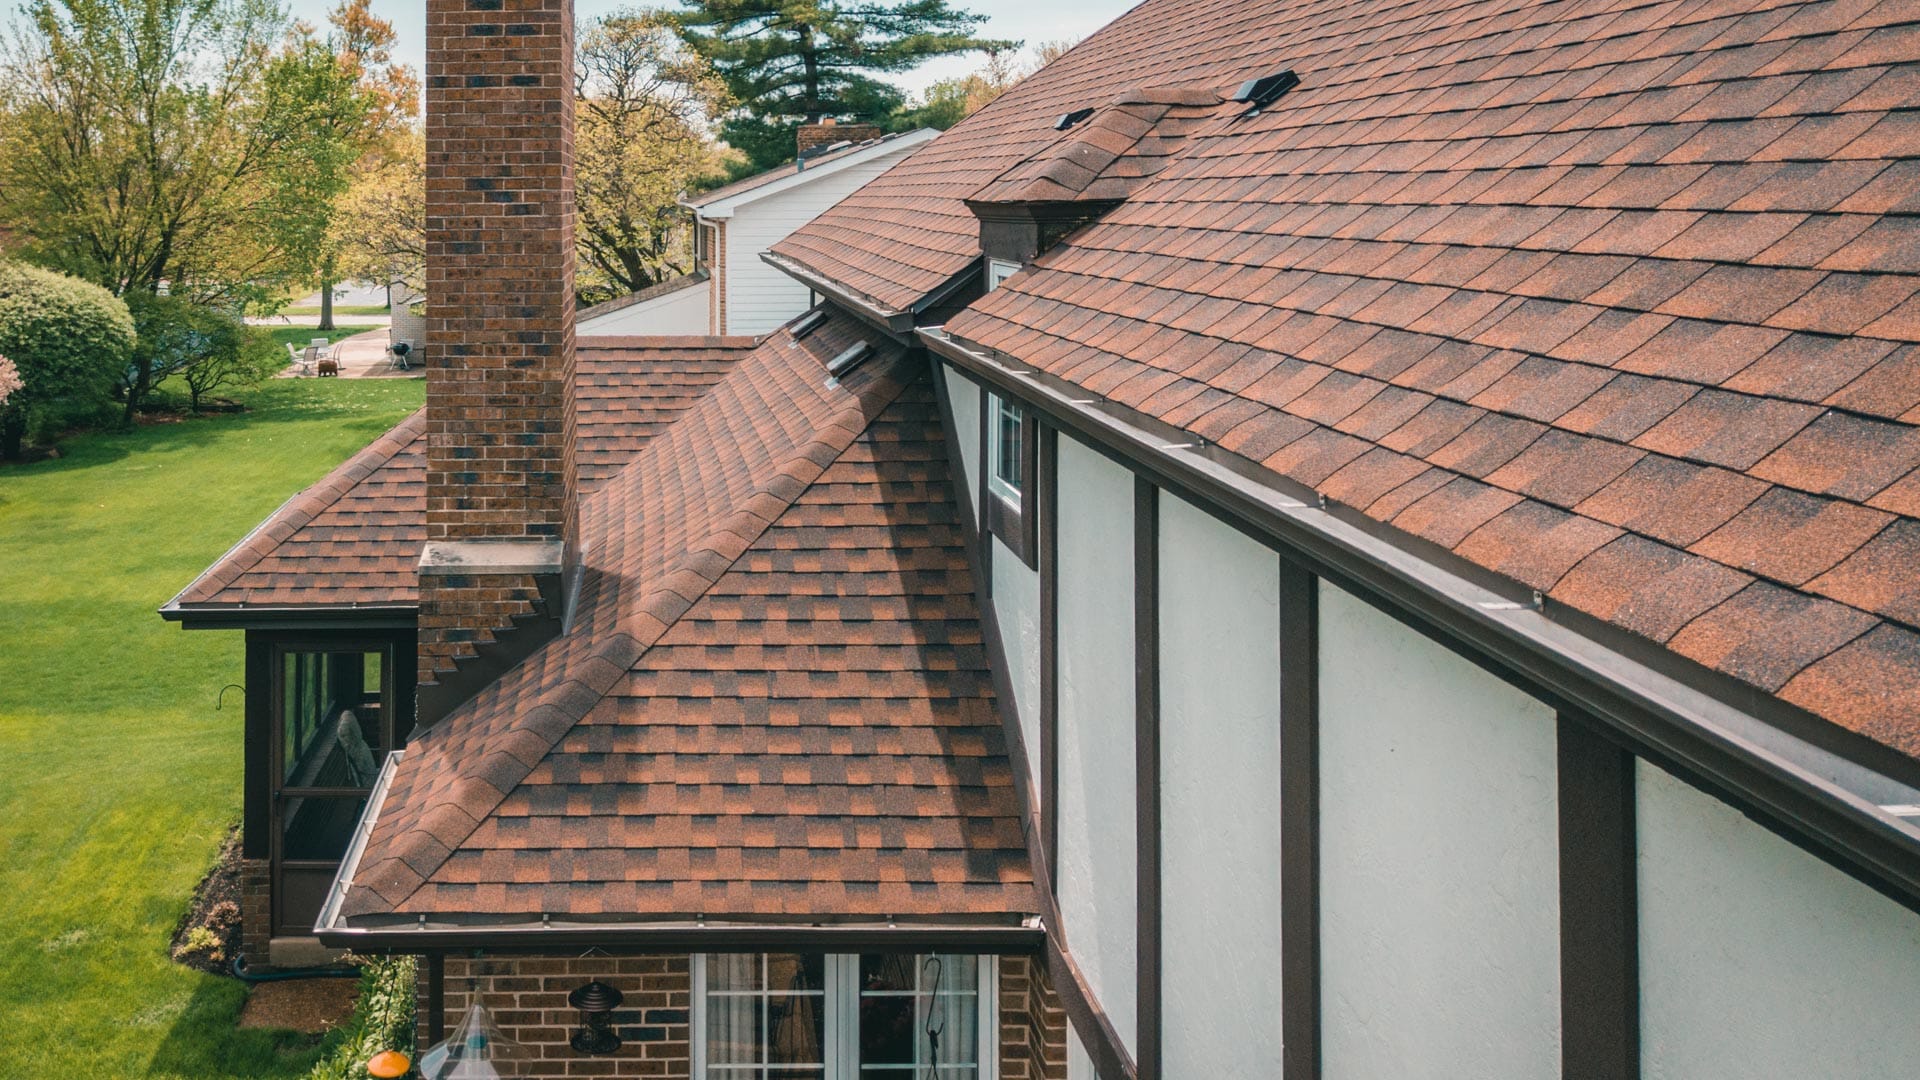 Roof repair job: Asphalt shingle roof